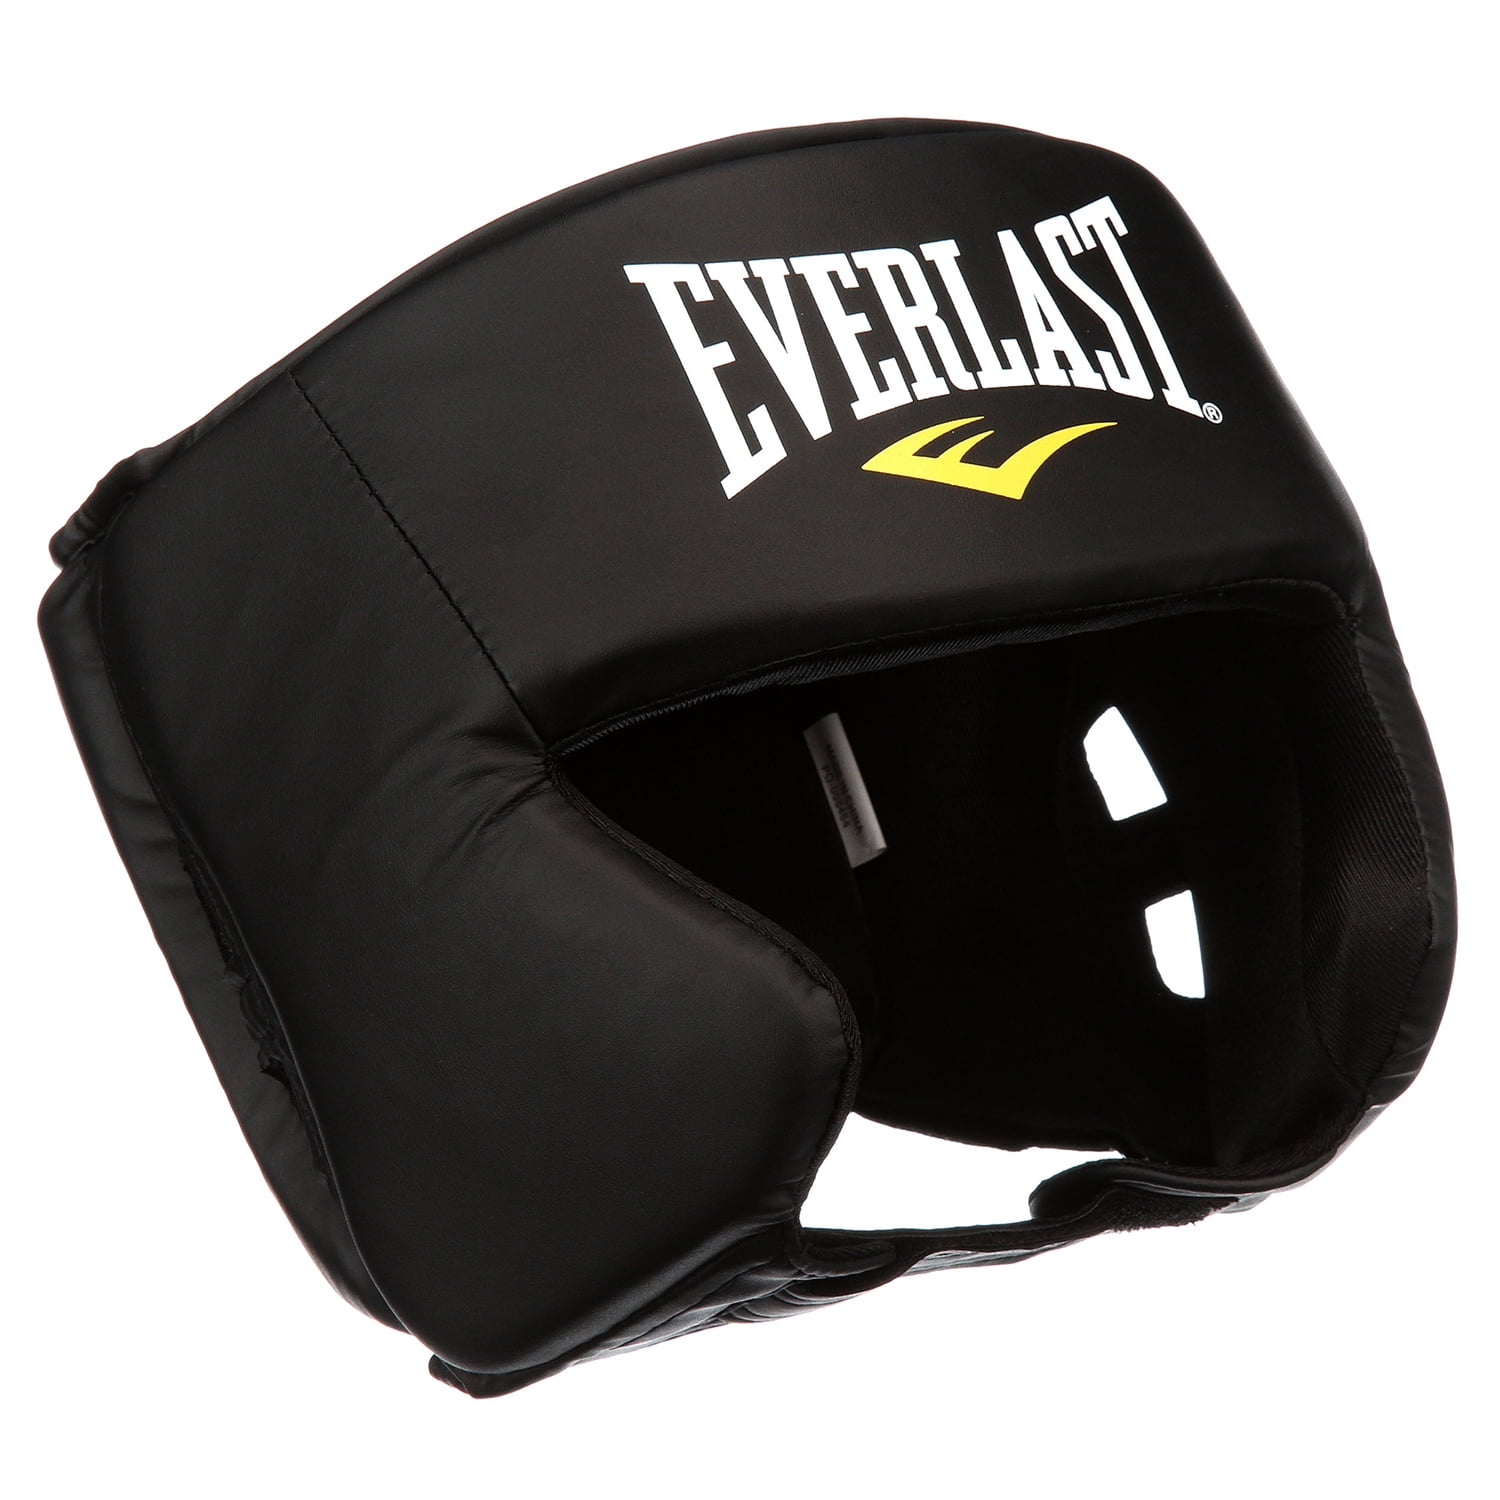 Everlast Model 4022 Everfresh Level II Boxing Head Gear for sale online 